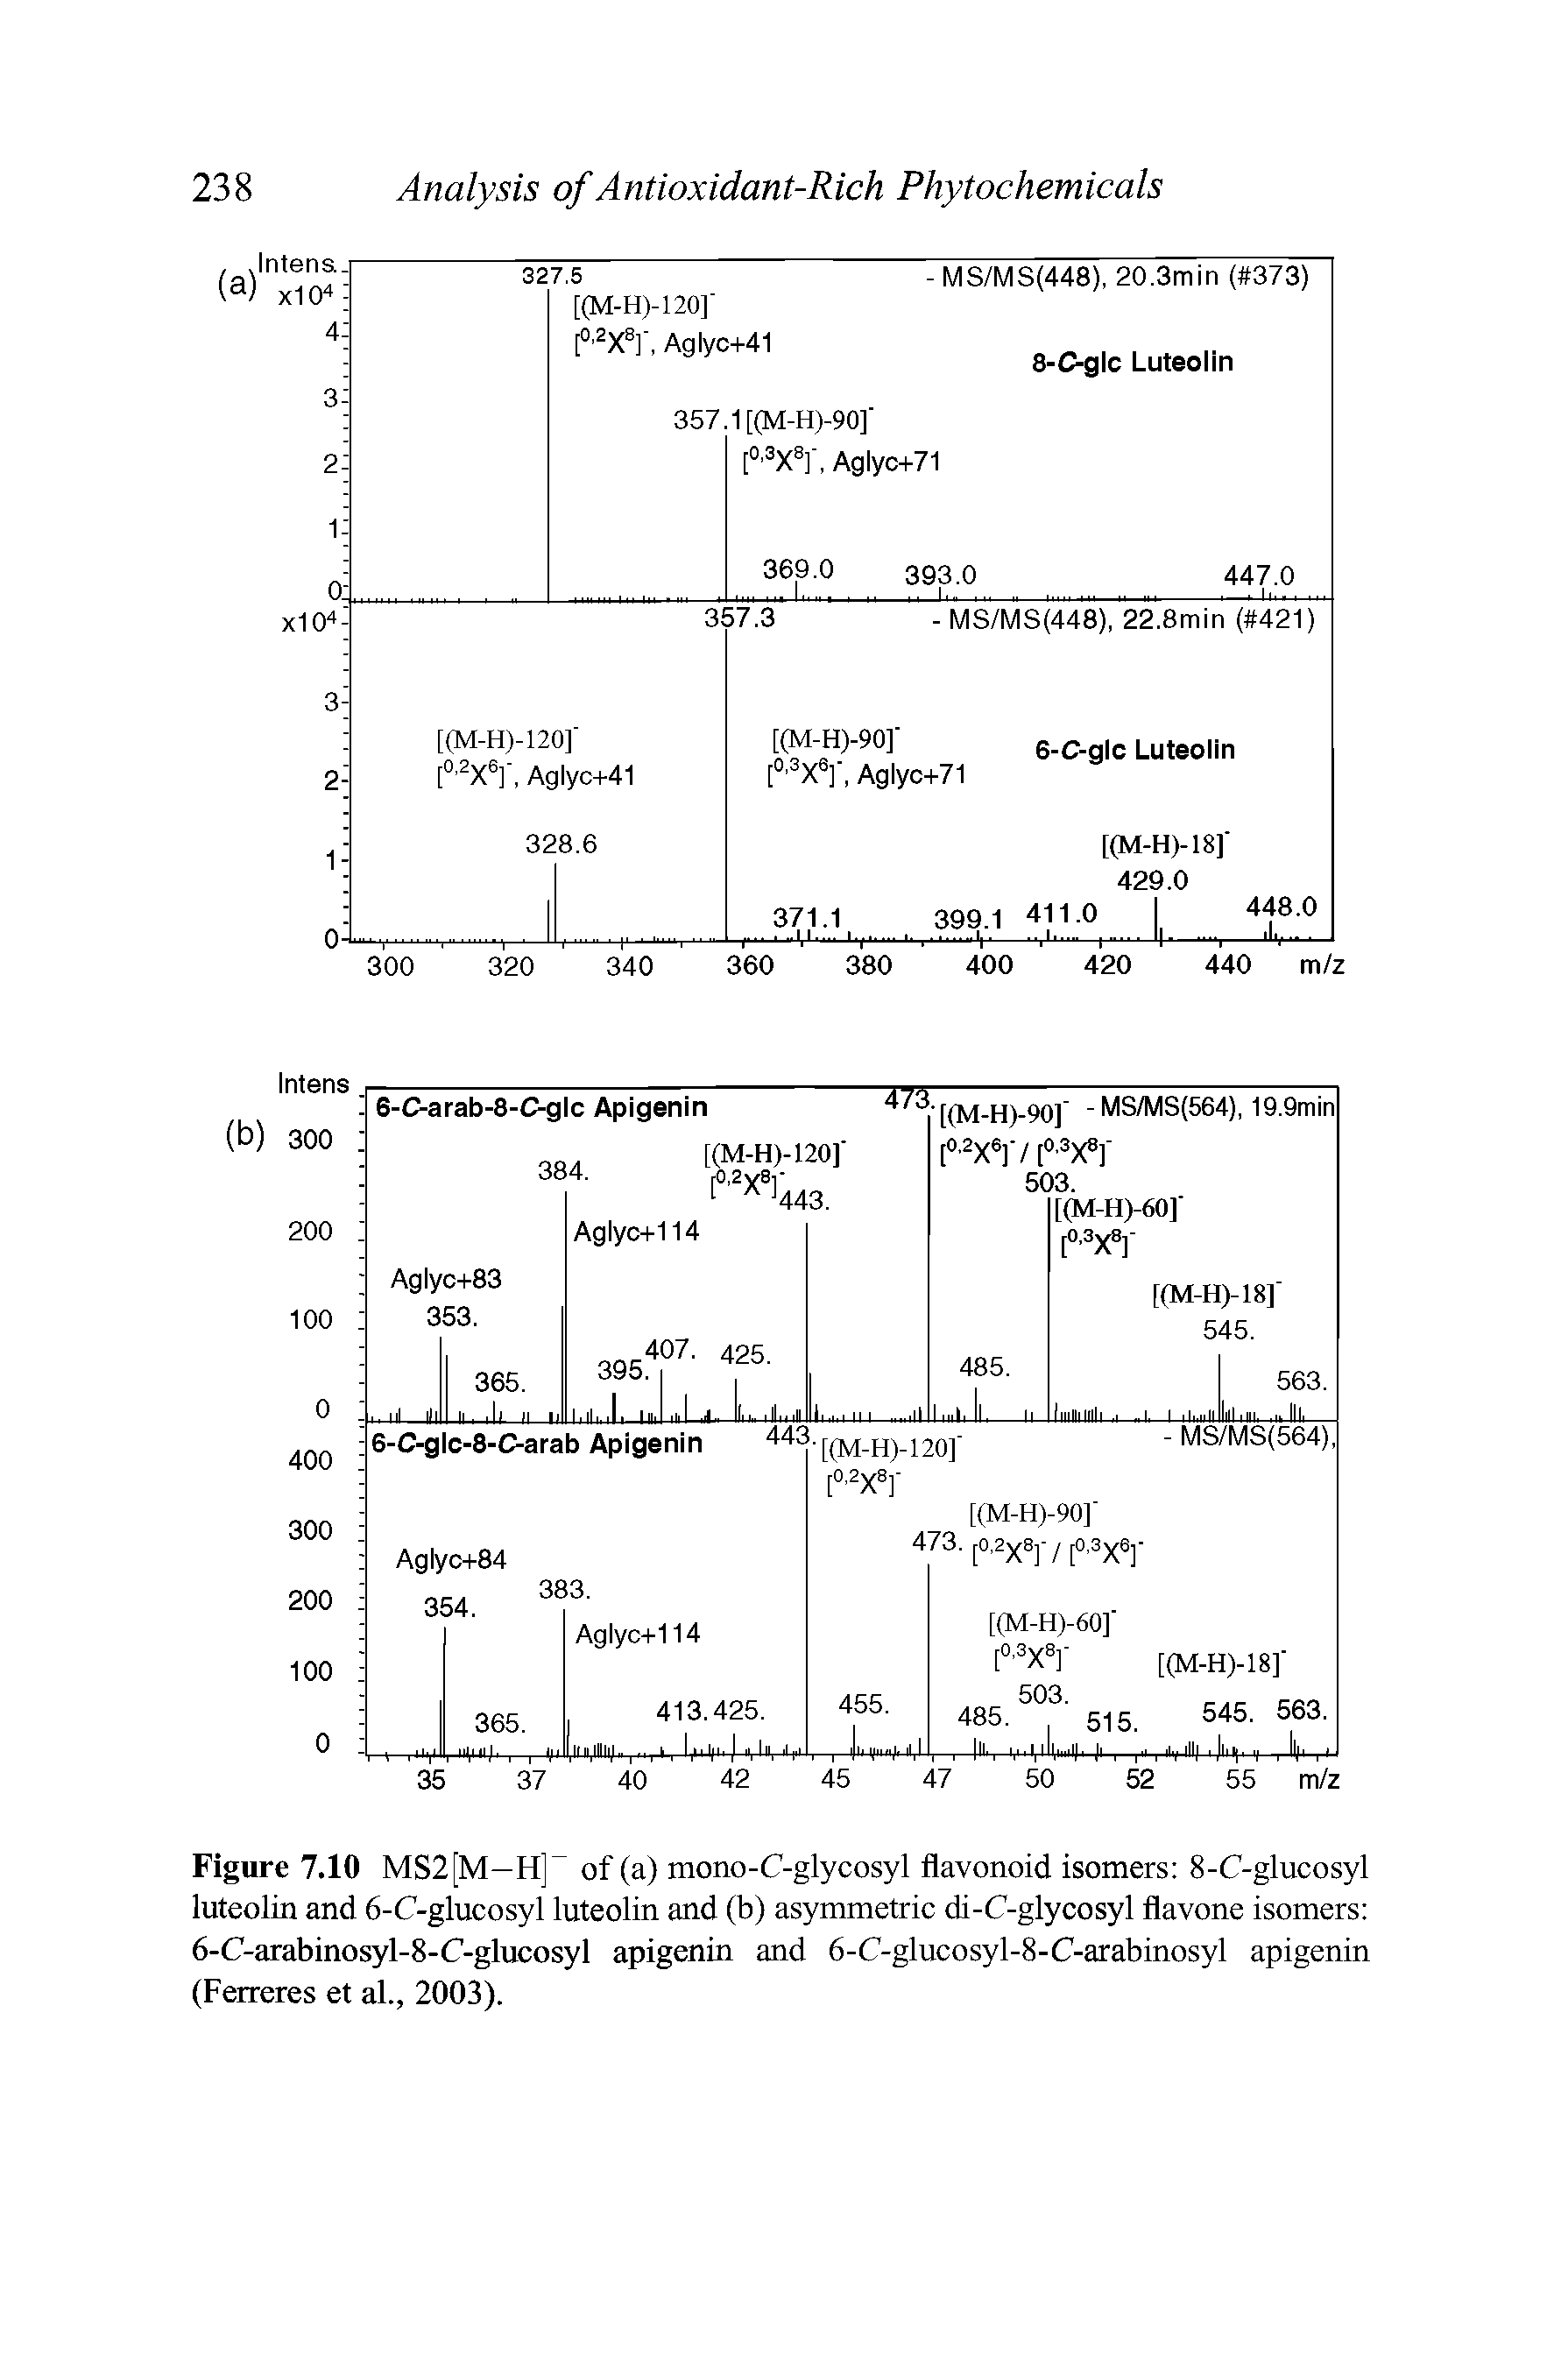 Figure 7.10 MS2[M—H] of (a) mono-C-glycosyl flavonoid isomers 8-C-glucosyl luteolin and 6-C-glucosyl luteolin and (b) asymmetric di-C-glycosyl flavone isomers 6-C-arabinosyl-8-C-glucosyl apigenin and 6-C-glucosyl-8-C-arabinosyl apigenin (Ferreres et al., 2003).